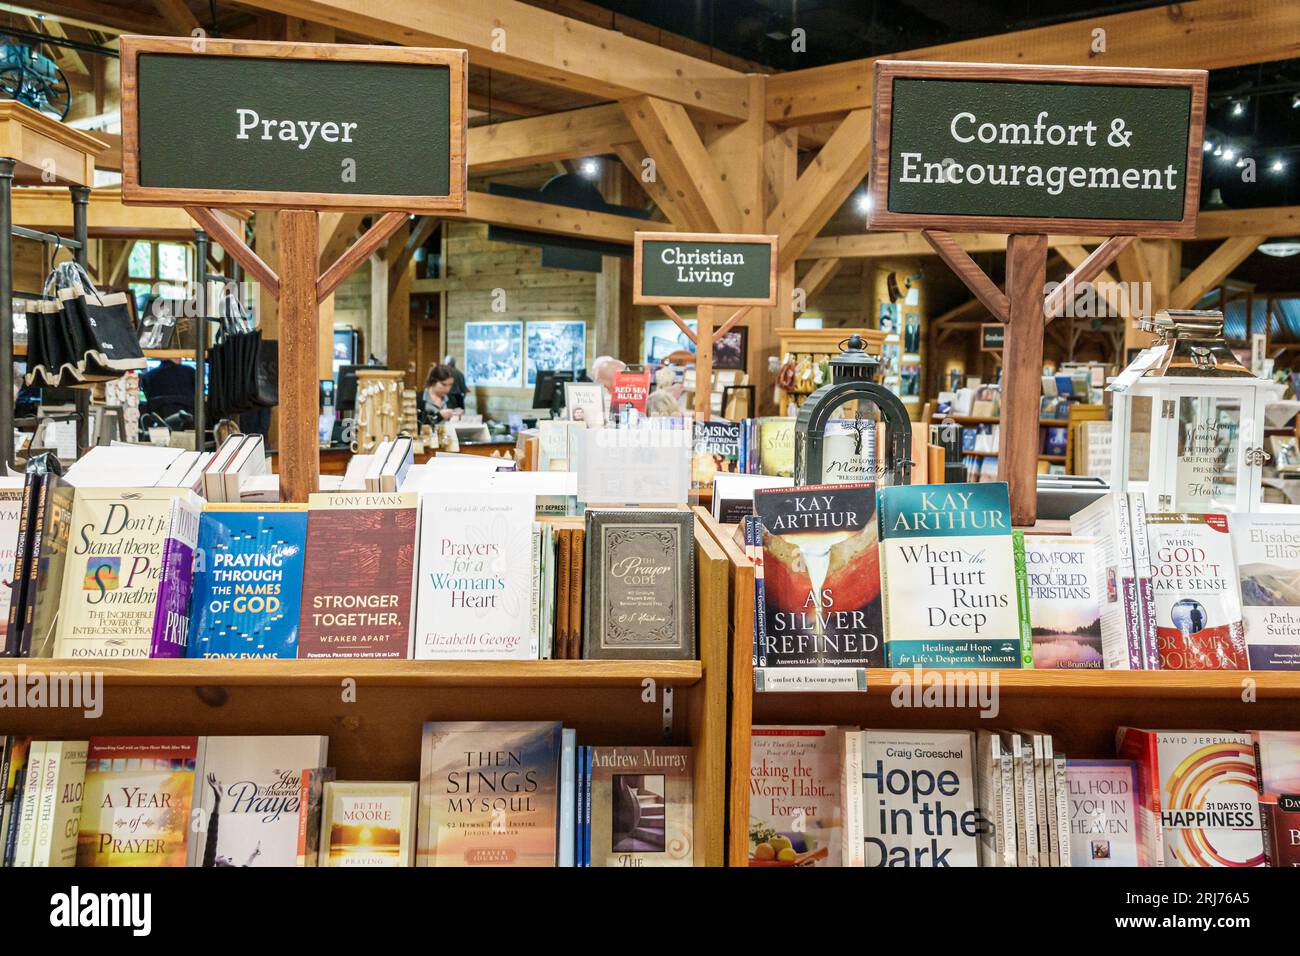 Charlotte North Carolina,Billy Graham Library,bookstore shelves books,prayer comfort encouragement,inside interior indoors,store business shop merchan Stock Photo